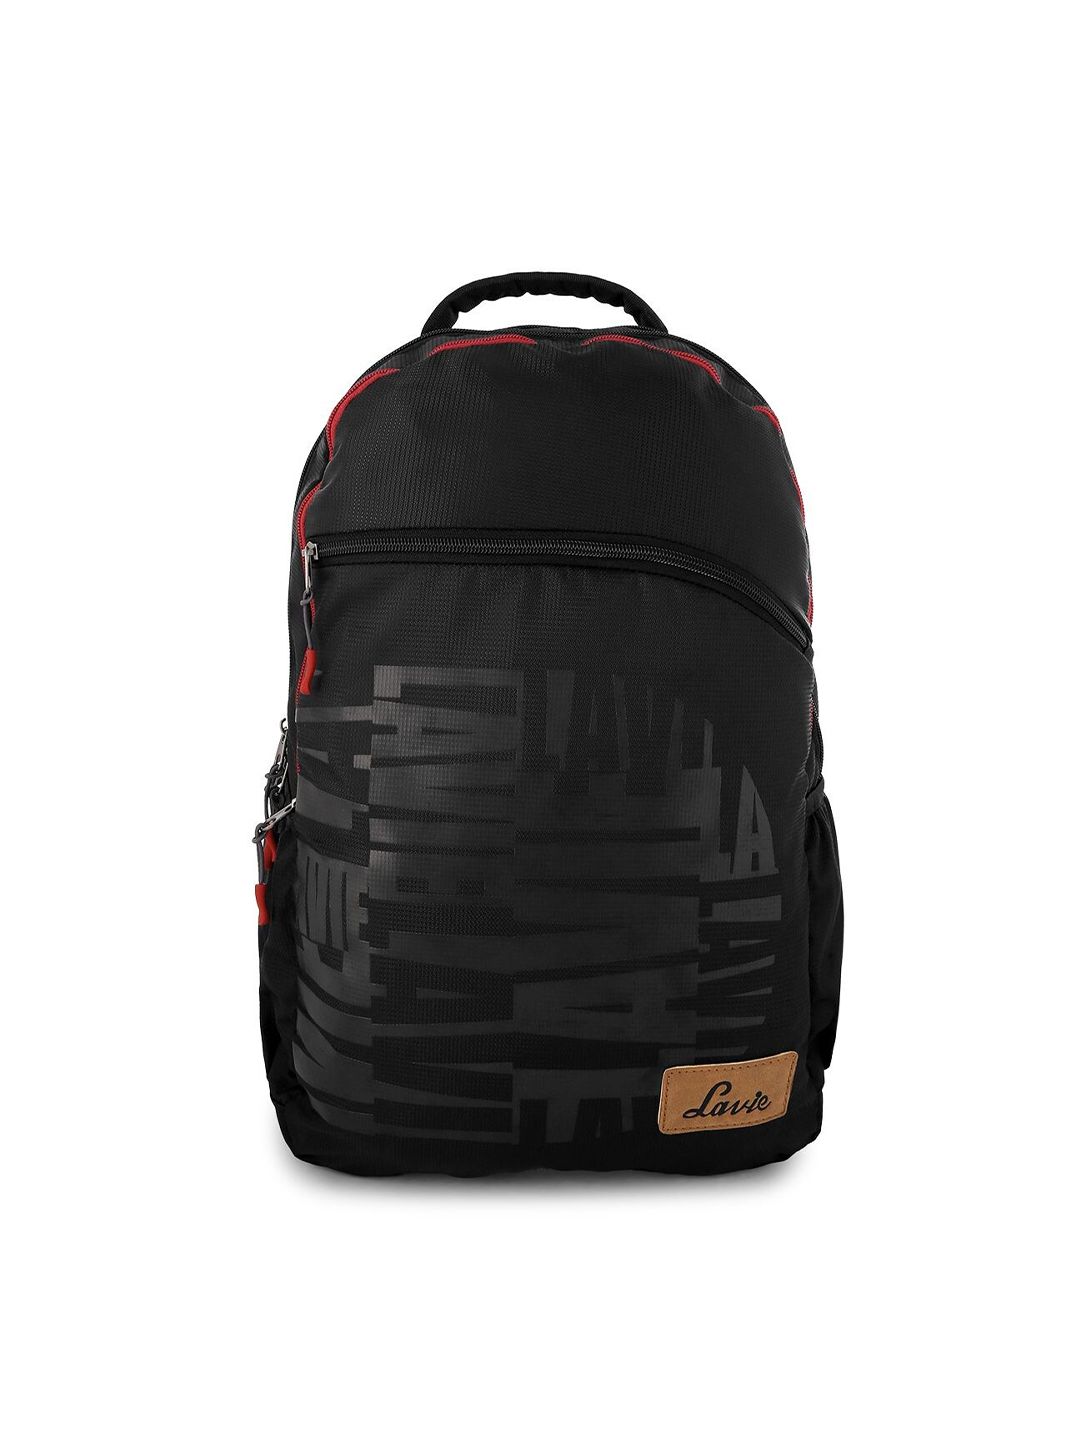 LAVIE SPORT Unisex Black & Red Printed Laptop Backpack Price in India